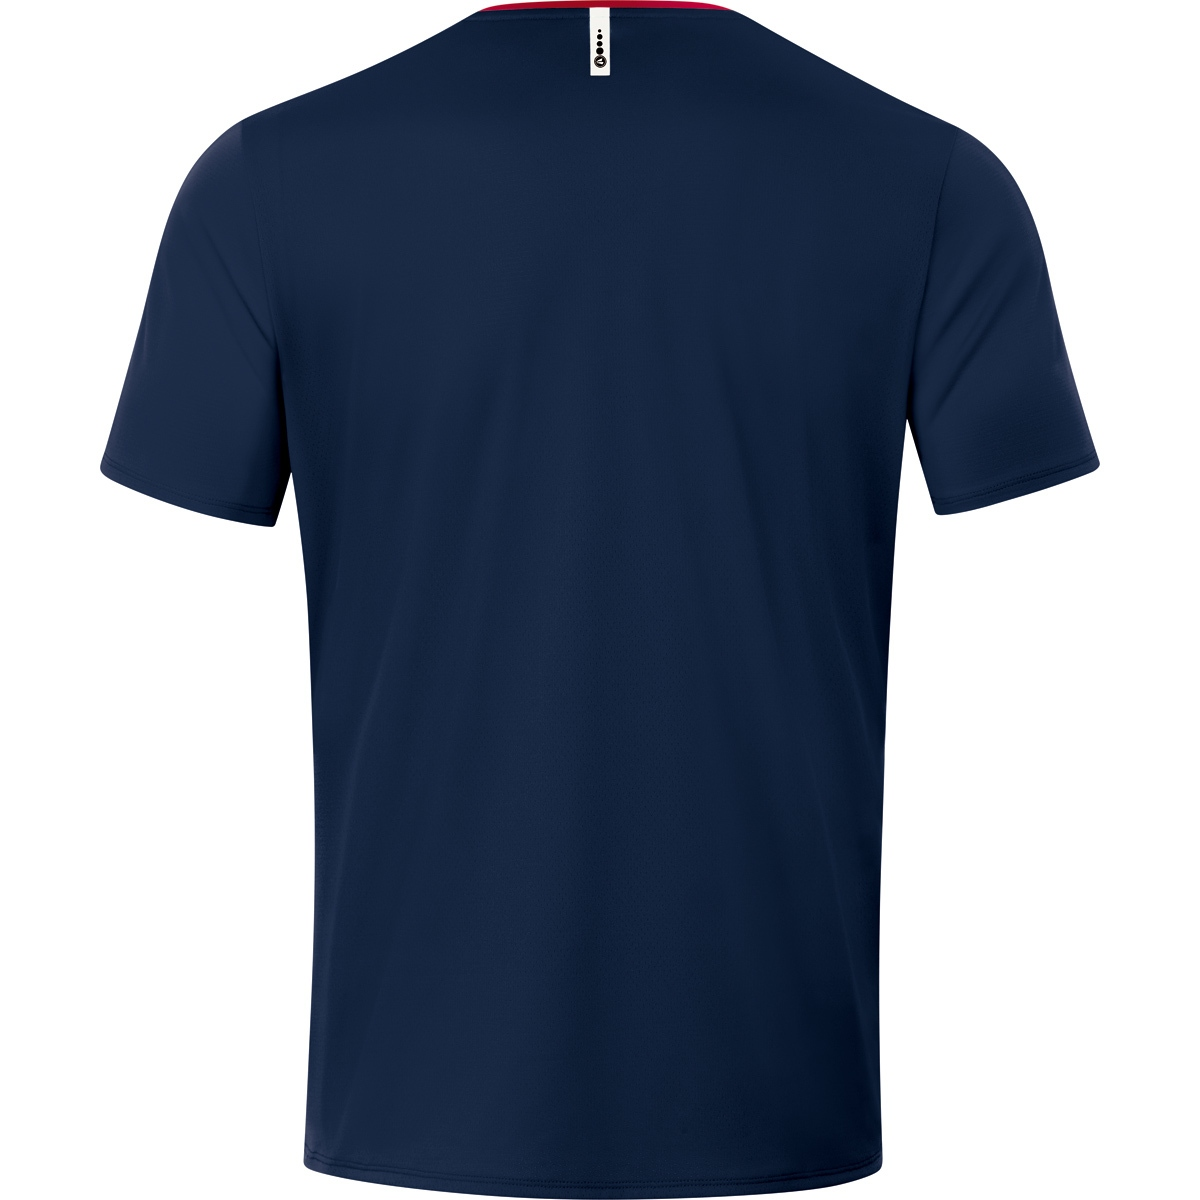 JAKO T-Shirt Champ rot, 116, 6120 marine/chili 2.0 Gr. Kinder